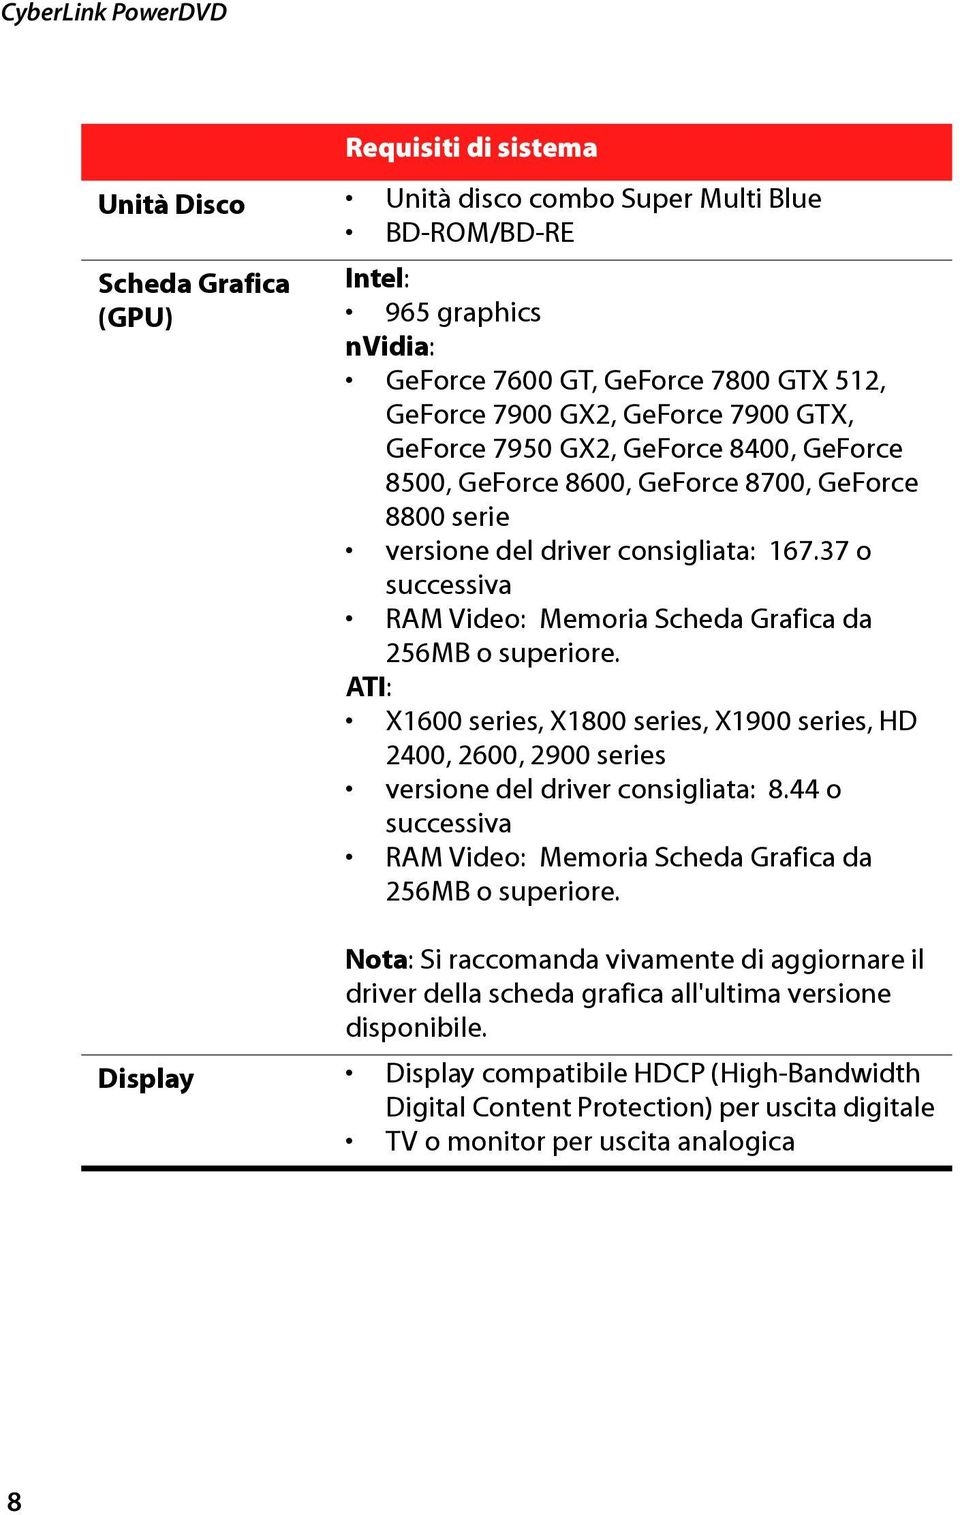 37 o successiva RAM Video: Memoria Scheda Grafica da 256MB o superiore. ATI: X1600 series, X1800 series, X1900 series, HD 2400, 2600, 2900 series versione del driver consigliata: 8.